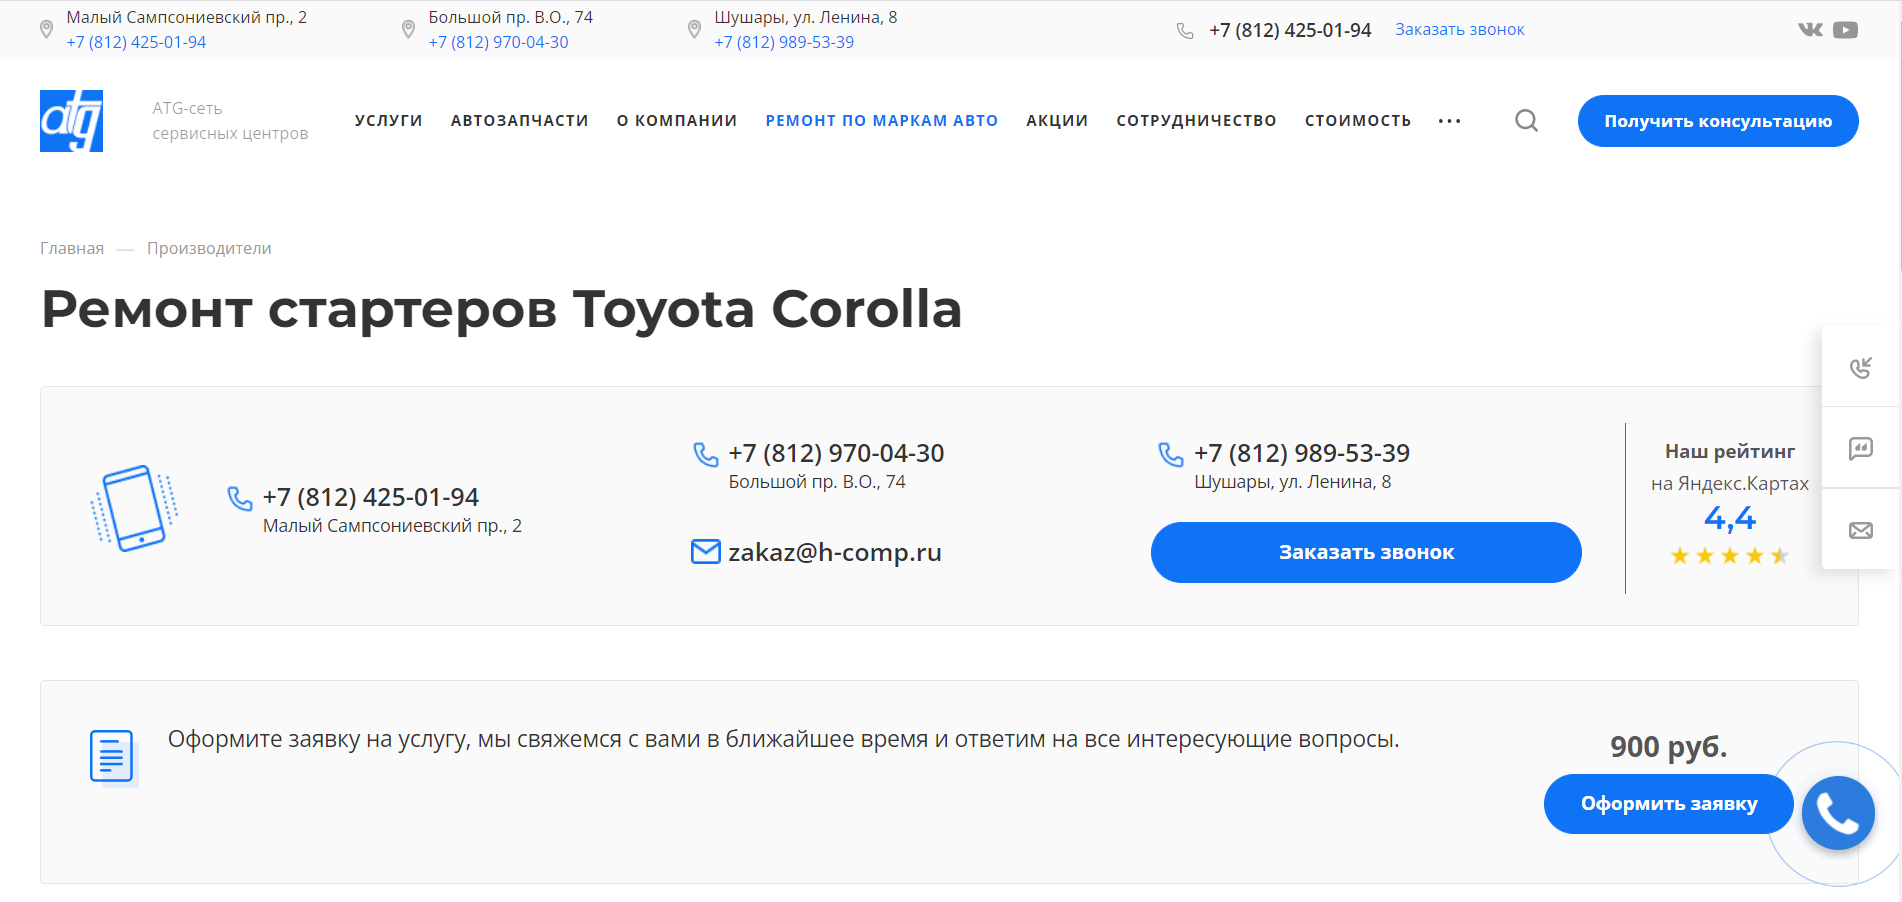 Ремонт стартеров Toyota Corolla